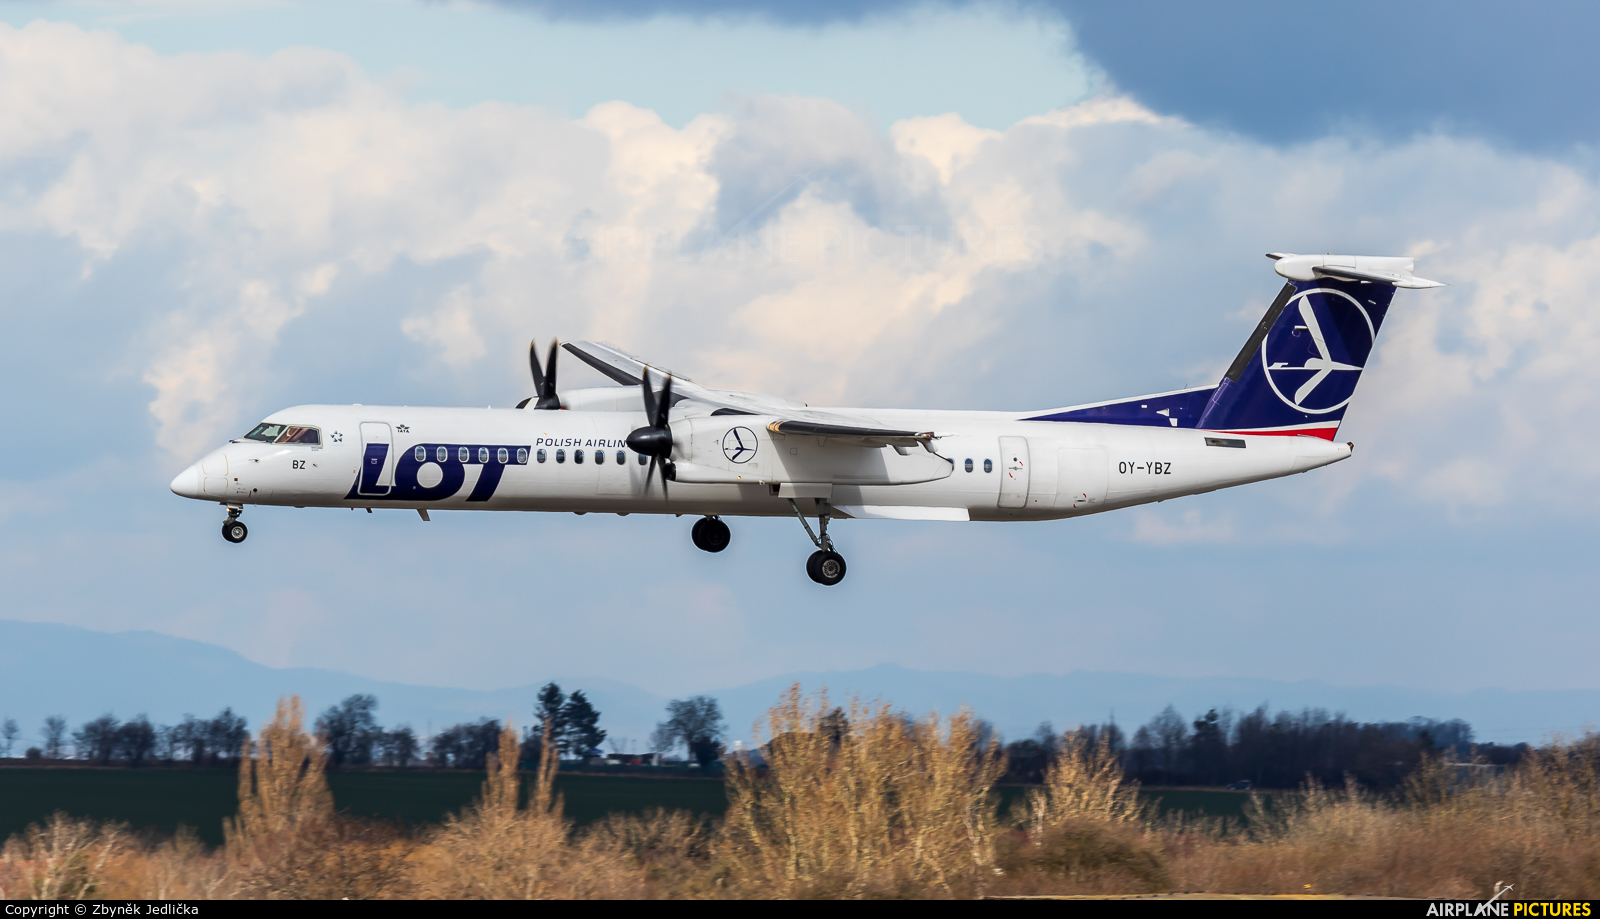 LOT - Polish Airlines OY-YBZ aircraft at Prague - Václav Havel